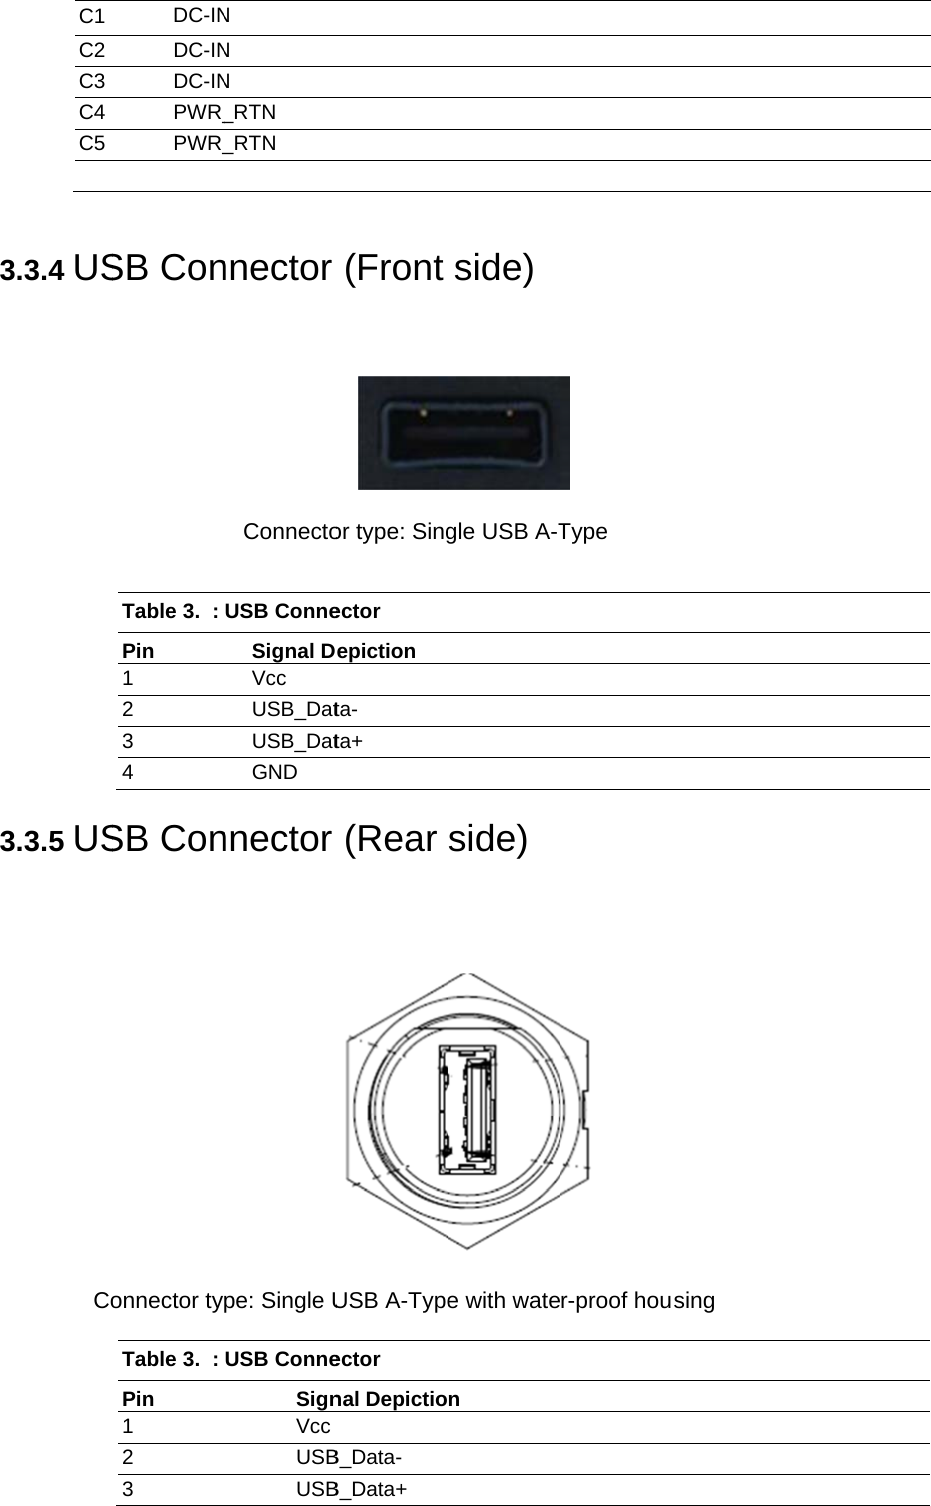  C1 C2 C3 C4 C5  3.3.4 US 3.3.5 USCoDC-INDC-INDC-INPWR_PWR_ SB ConTable 3.  : Pin 1 2 3 4 SB Cononnector tyTable 3.  : Pin 1 2 3 N N  N  _RTN _RTN nnectorConnectoUSB ConneSignal DVcc USB_DatUSB_DatGND nnectorpe: Single UUSB ConneSignVccUSBUSB(Front or type: Singector epiction ta- ta+ (Rear USB A-Typeector nal DepictioB_Data- B_Data+       side) gle USB A-Tside) e with waten       Type  r-proof housing